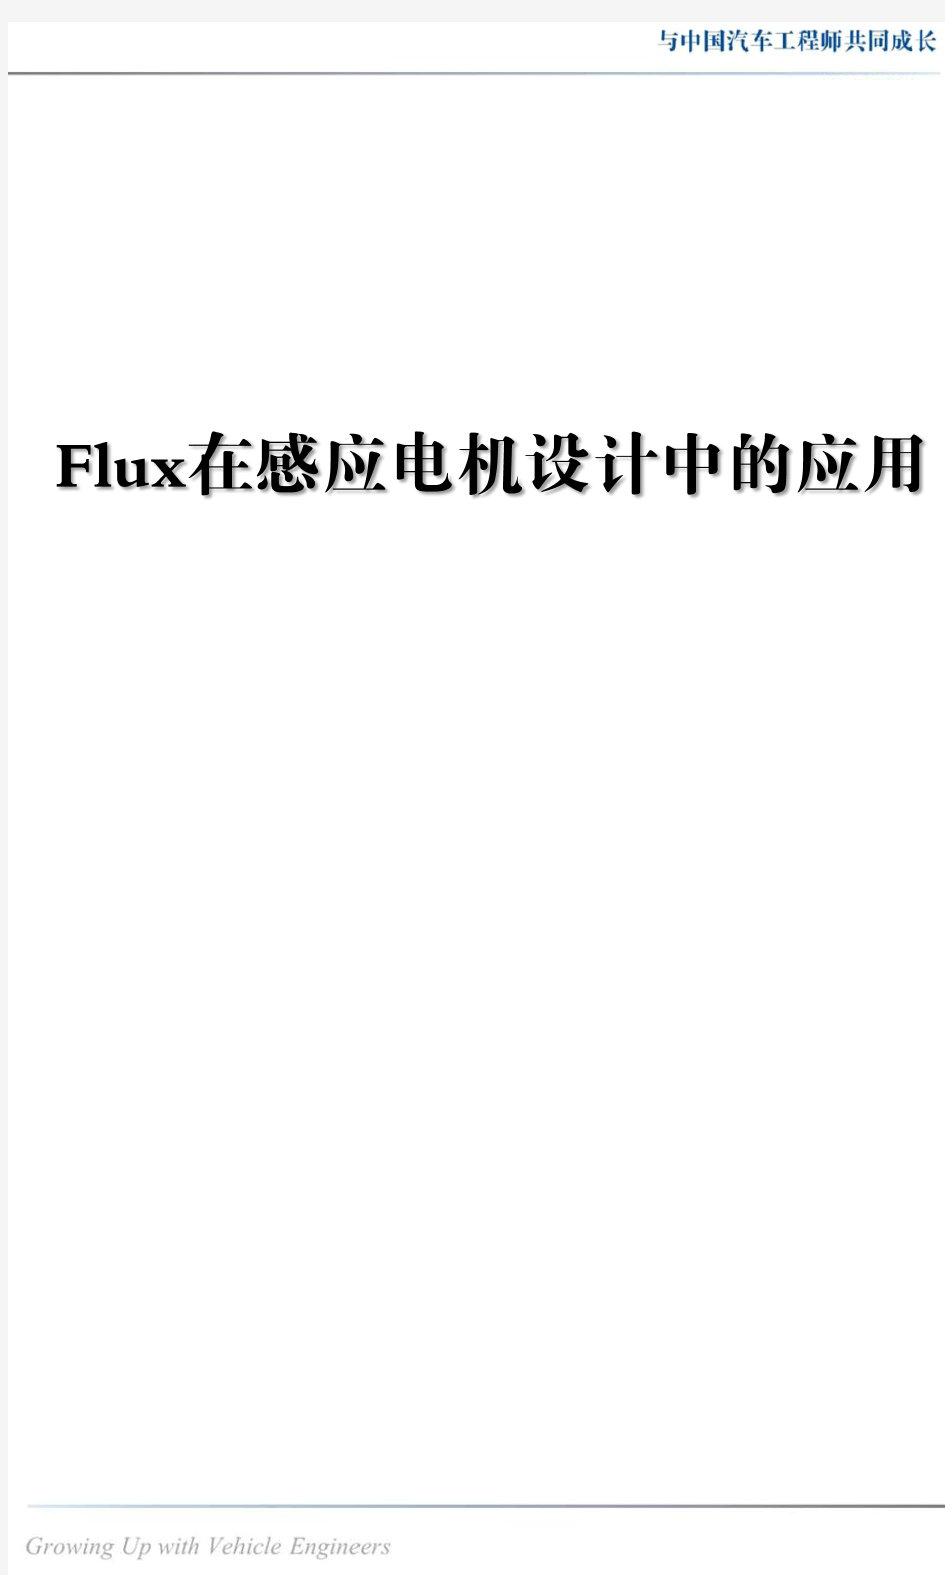 Flux 在感应电机设计中的应用